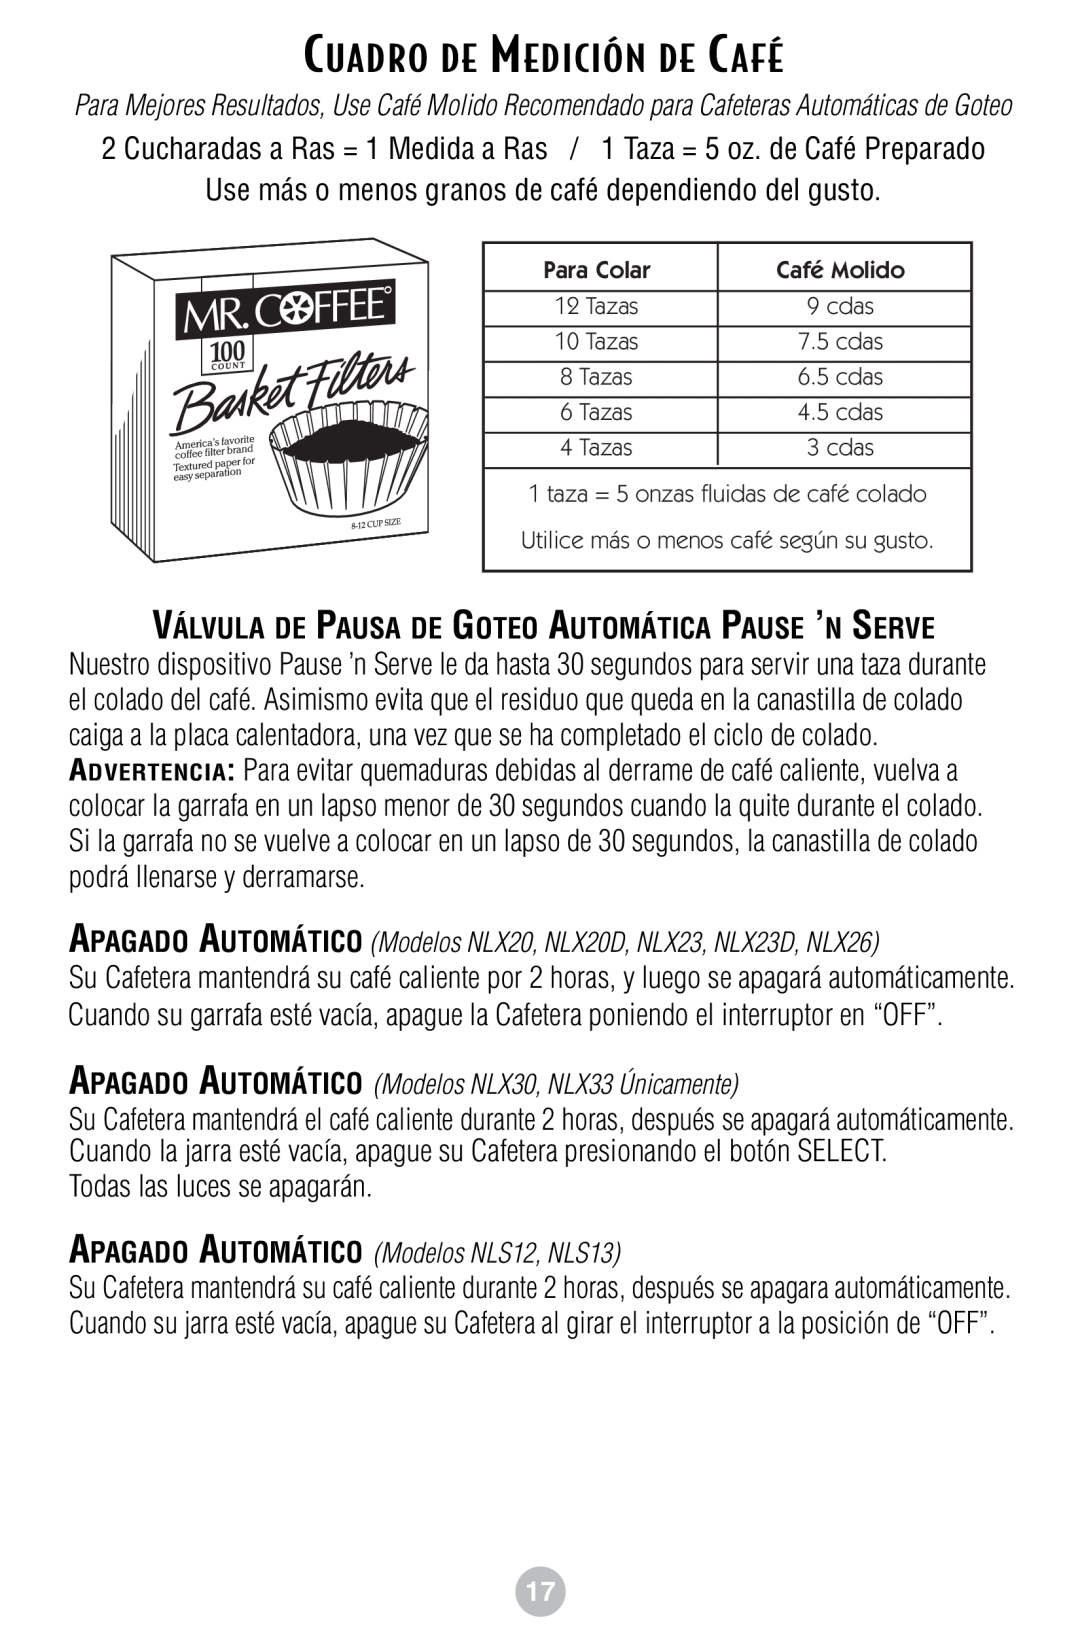 Mr. Coffee NLX26/Red NL12 Cuadro De Medición De Café, APAGADO AUTOMÁTICO Modelos NLS12, NLS13, Para Colar, Café Molido 